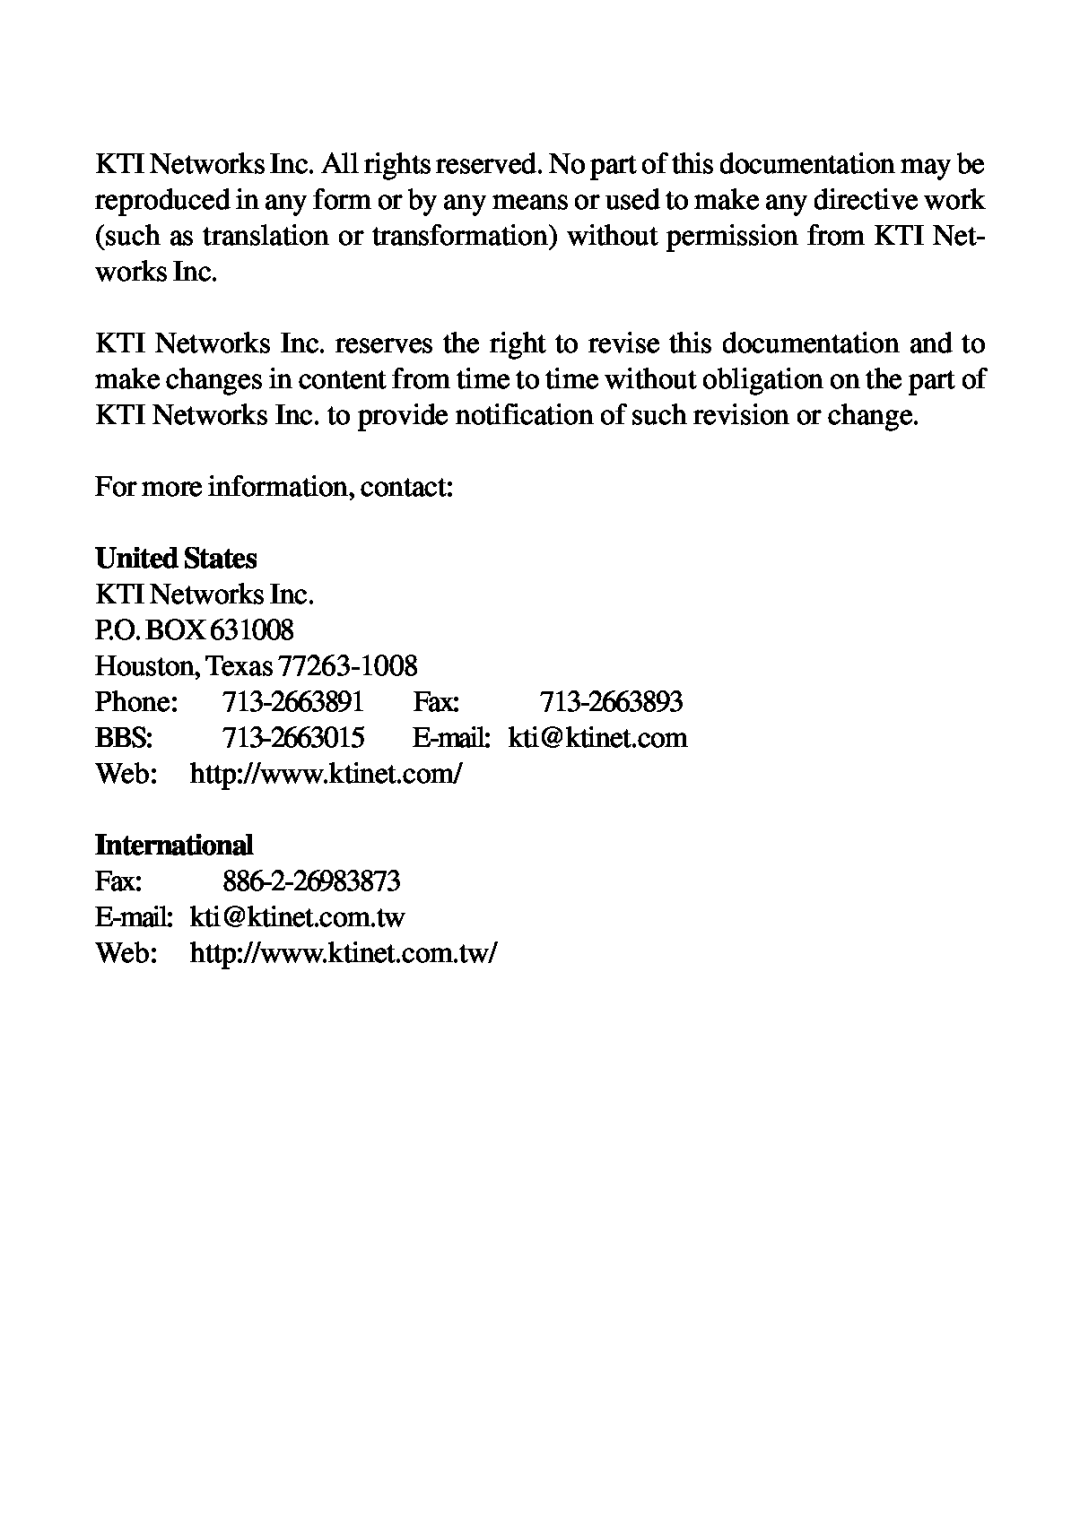 KTI Networks DH-8T manual United States, International 